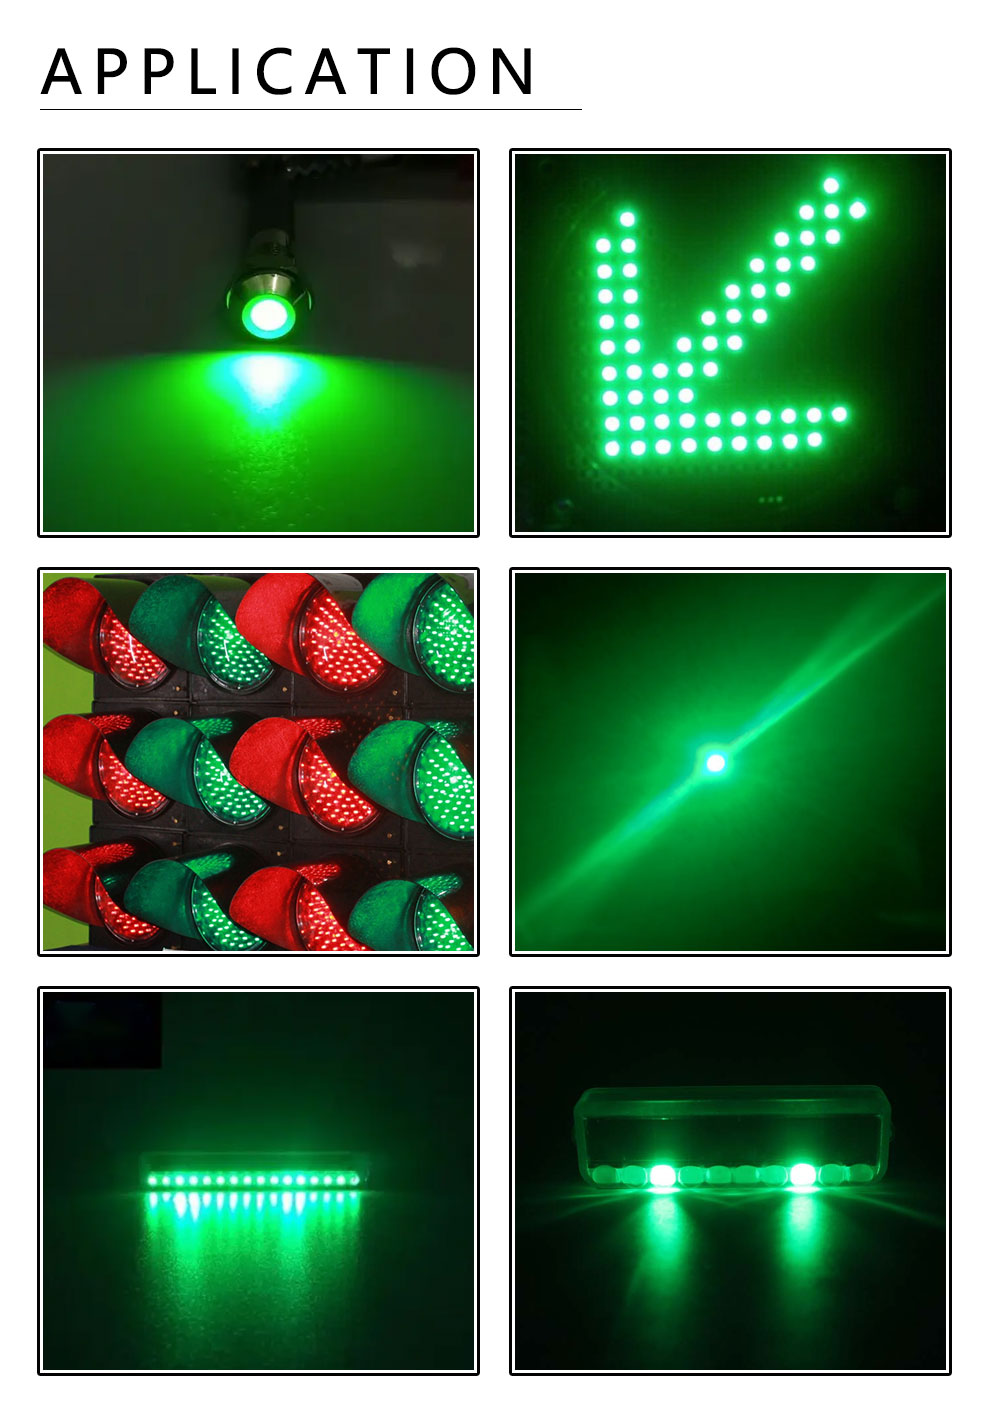 Green throguh-hole LED and SMD LED application